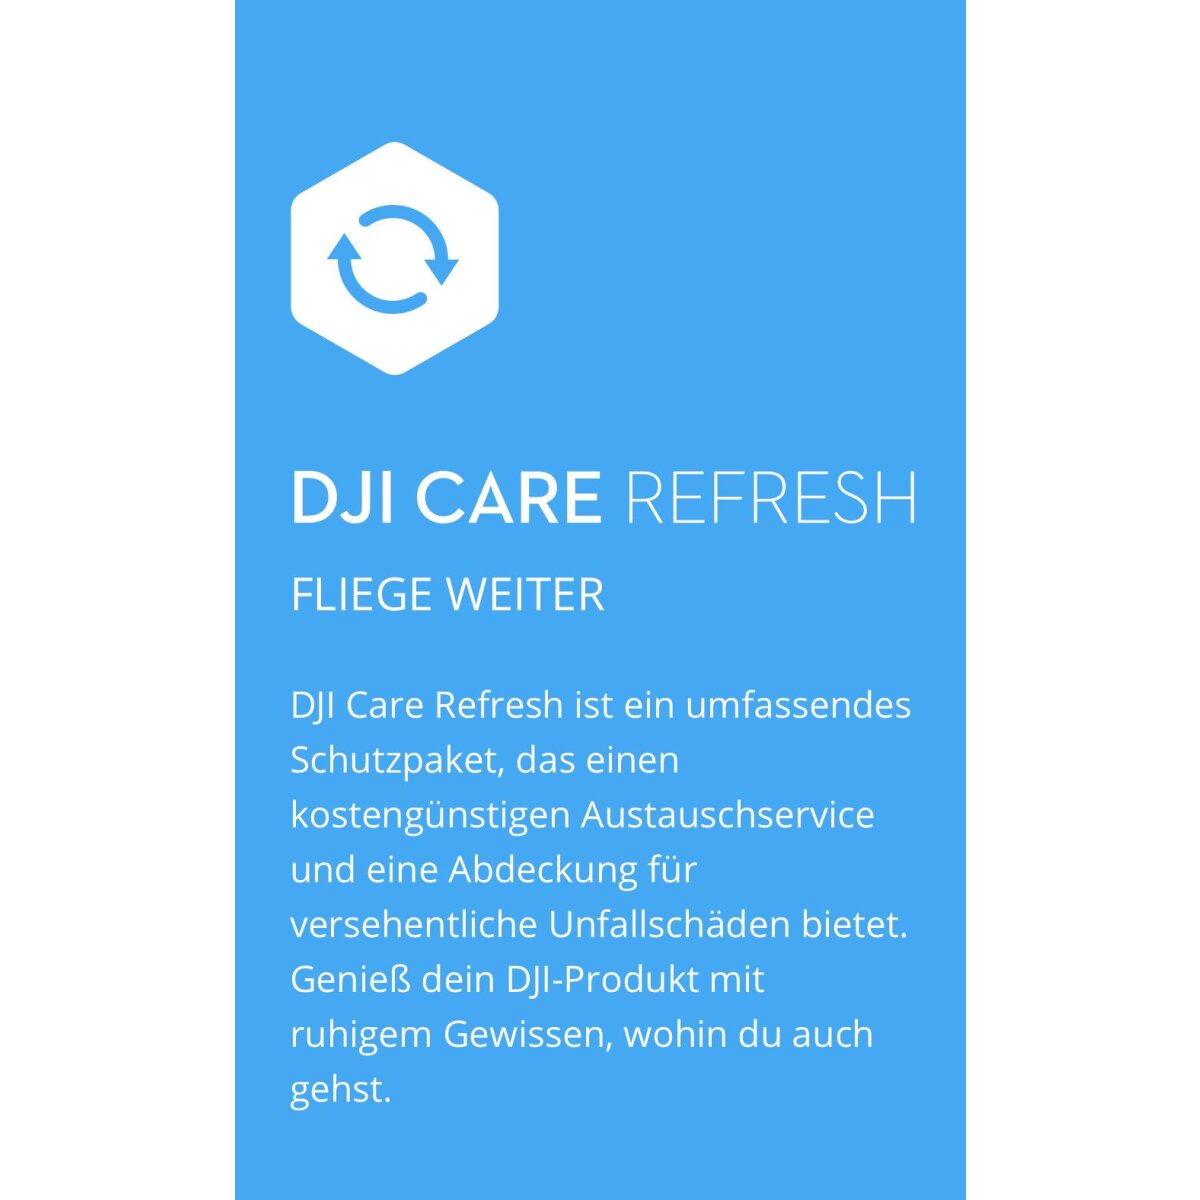 DJI Care Refresh Karte - The Austrian